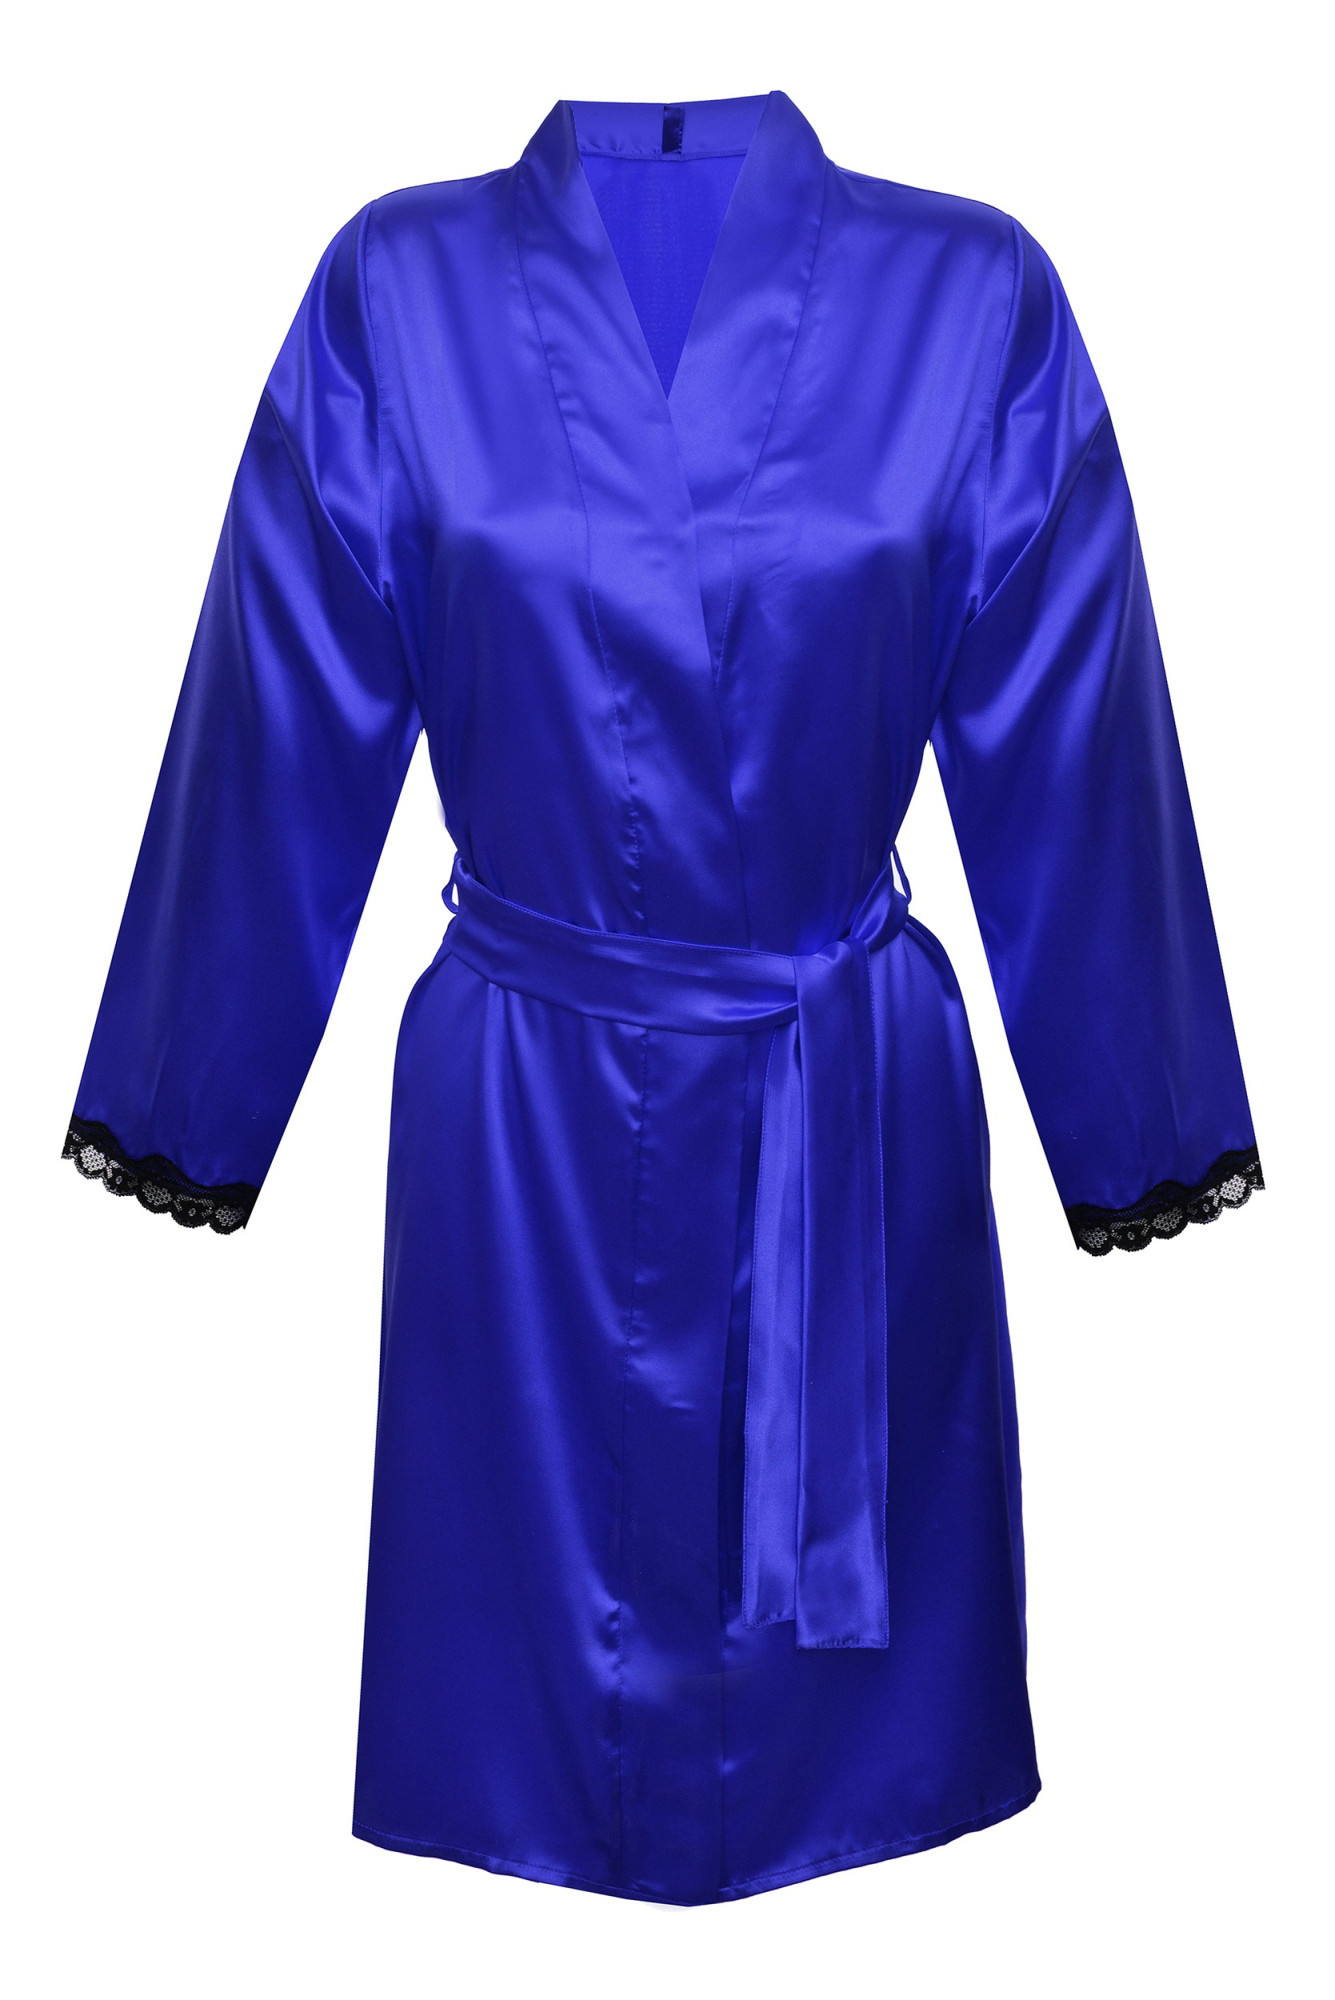 DKaren Housecoat Nancy Blue L Modrá